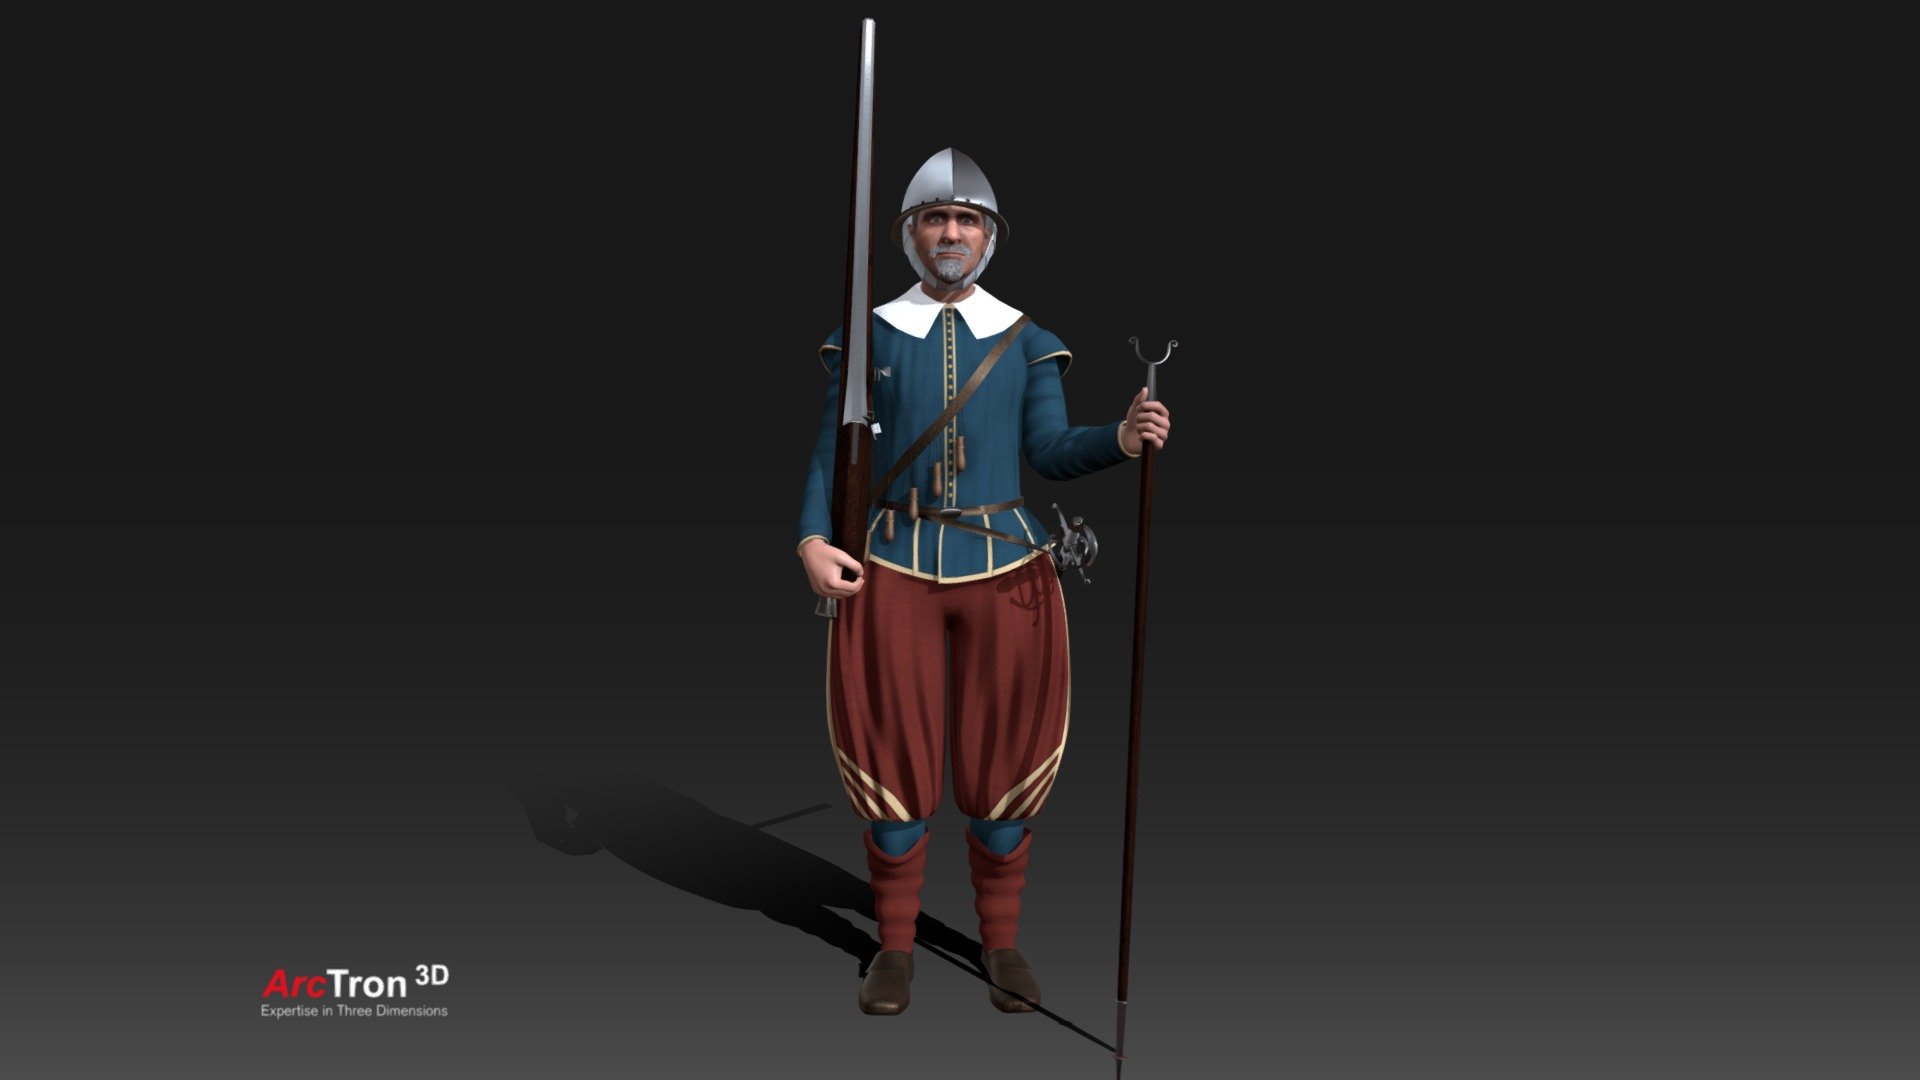 Musketier - Festung Königstein - Musketier Avatar Animation - 3D model by ArcTron 3D (@ArcTron3D) 3d model